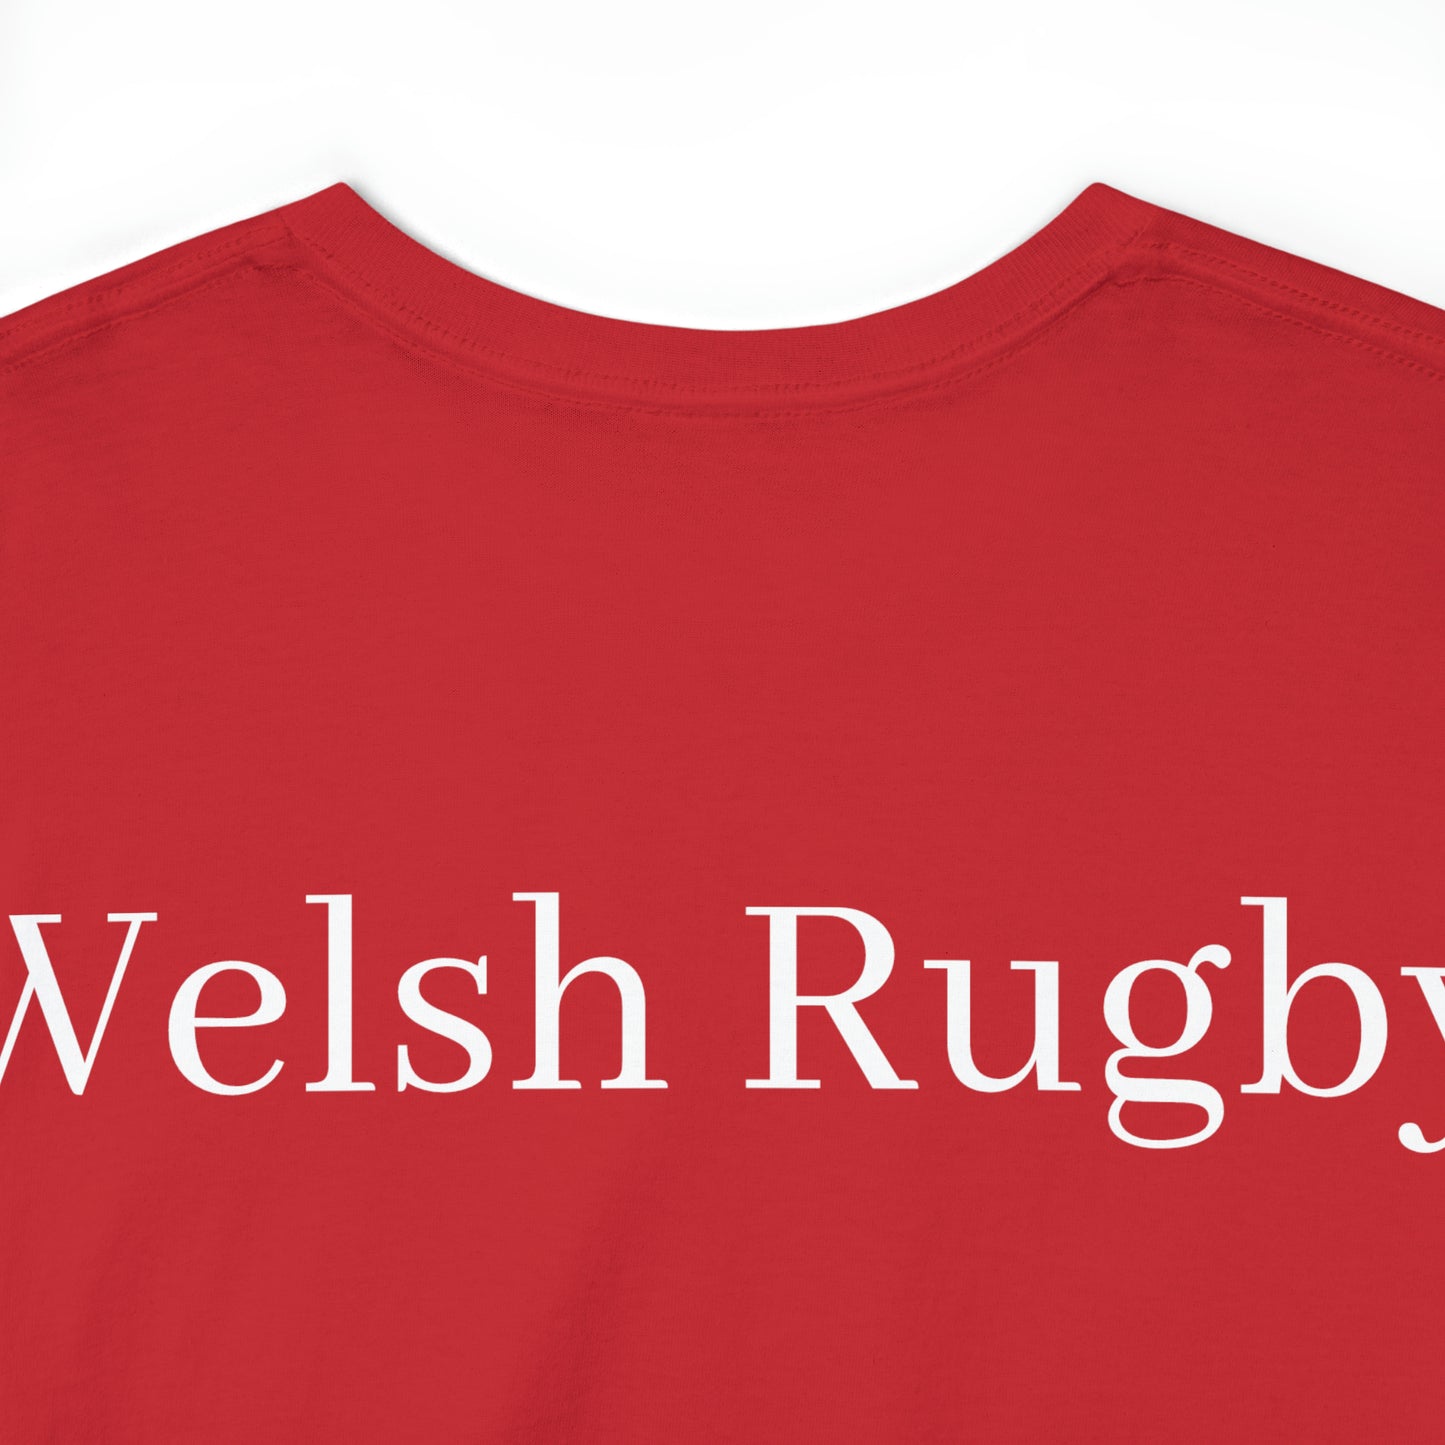 Ready Wales - dark shirts